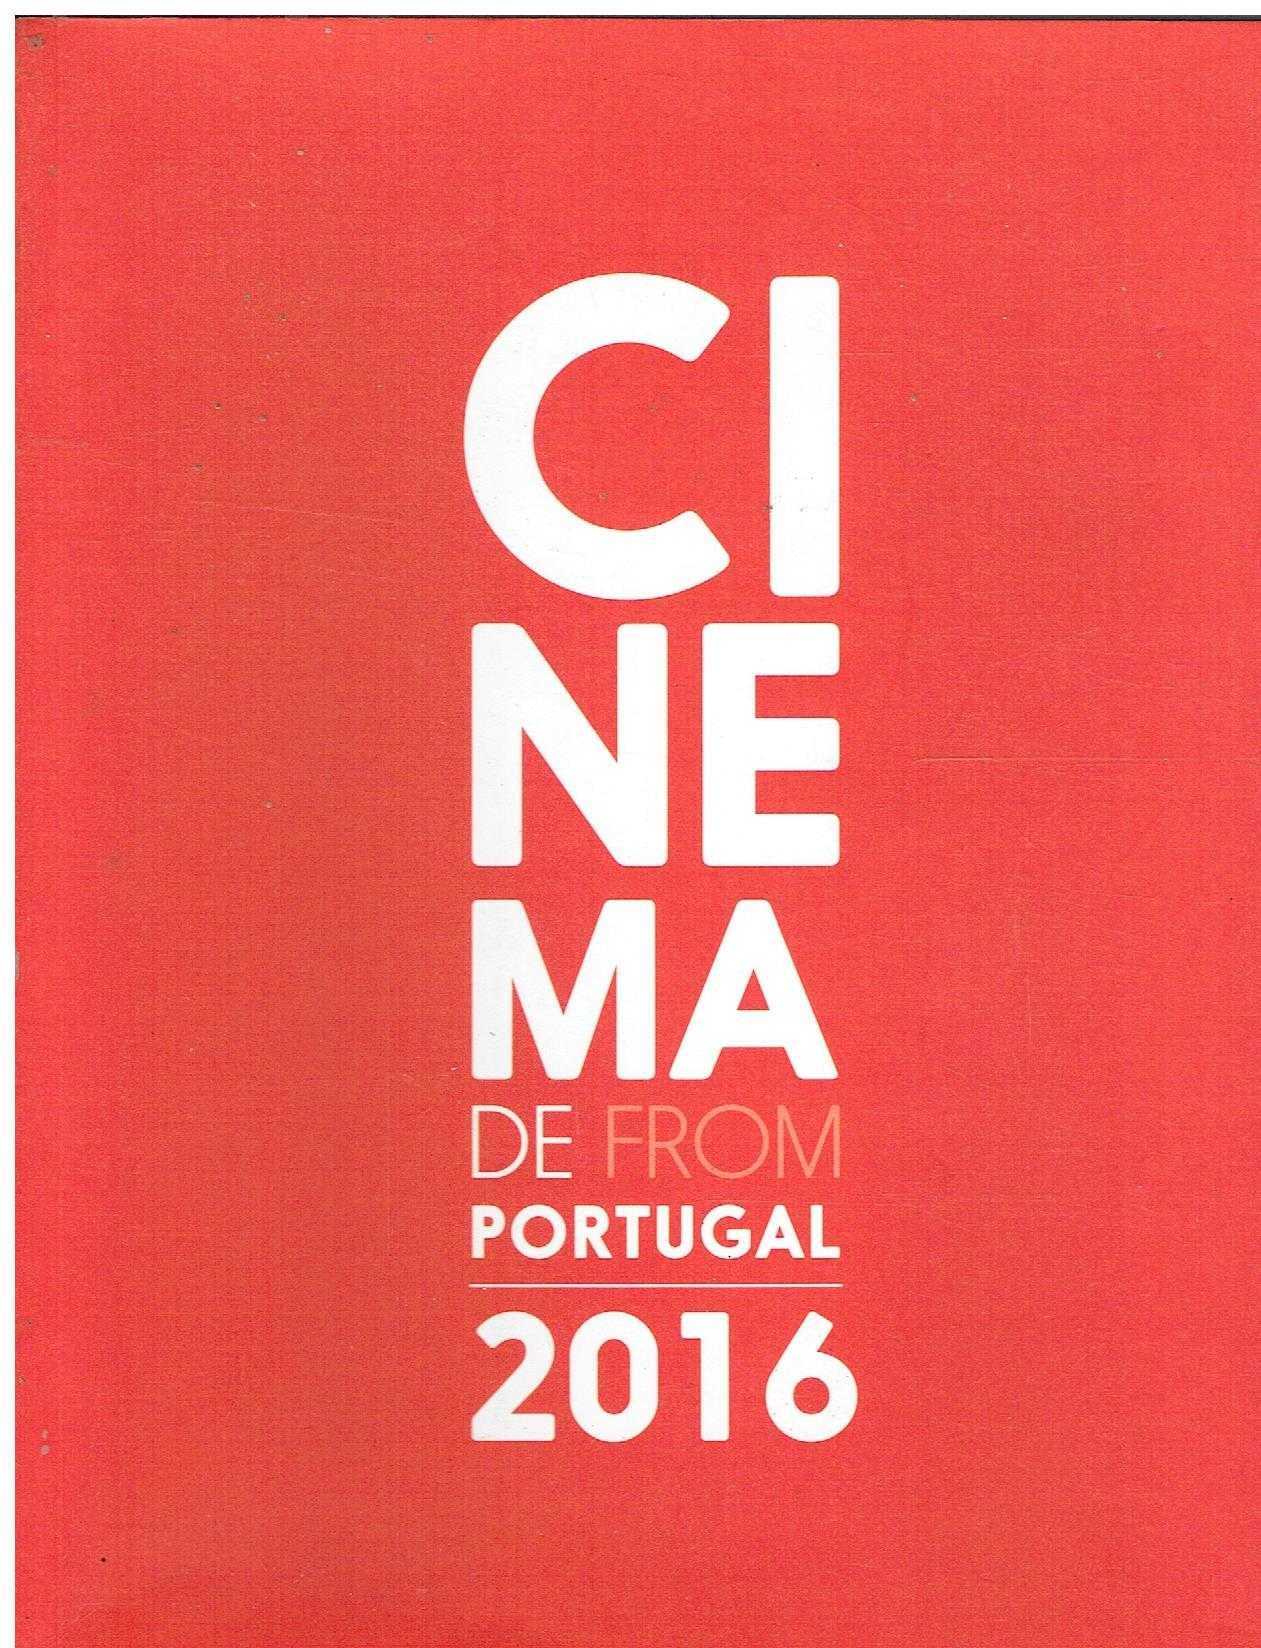 1033

Cinema de from Portugal - 2016